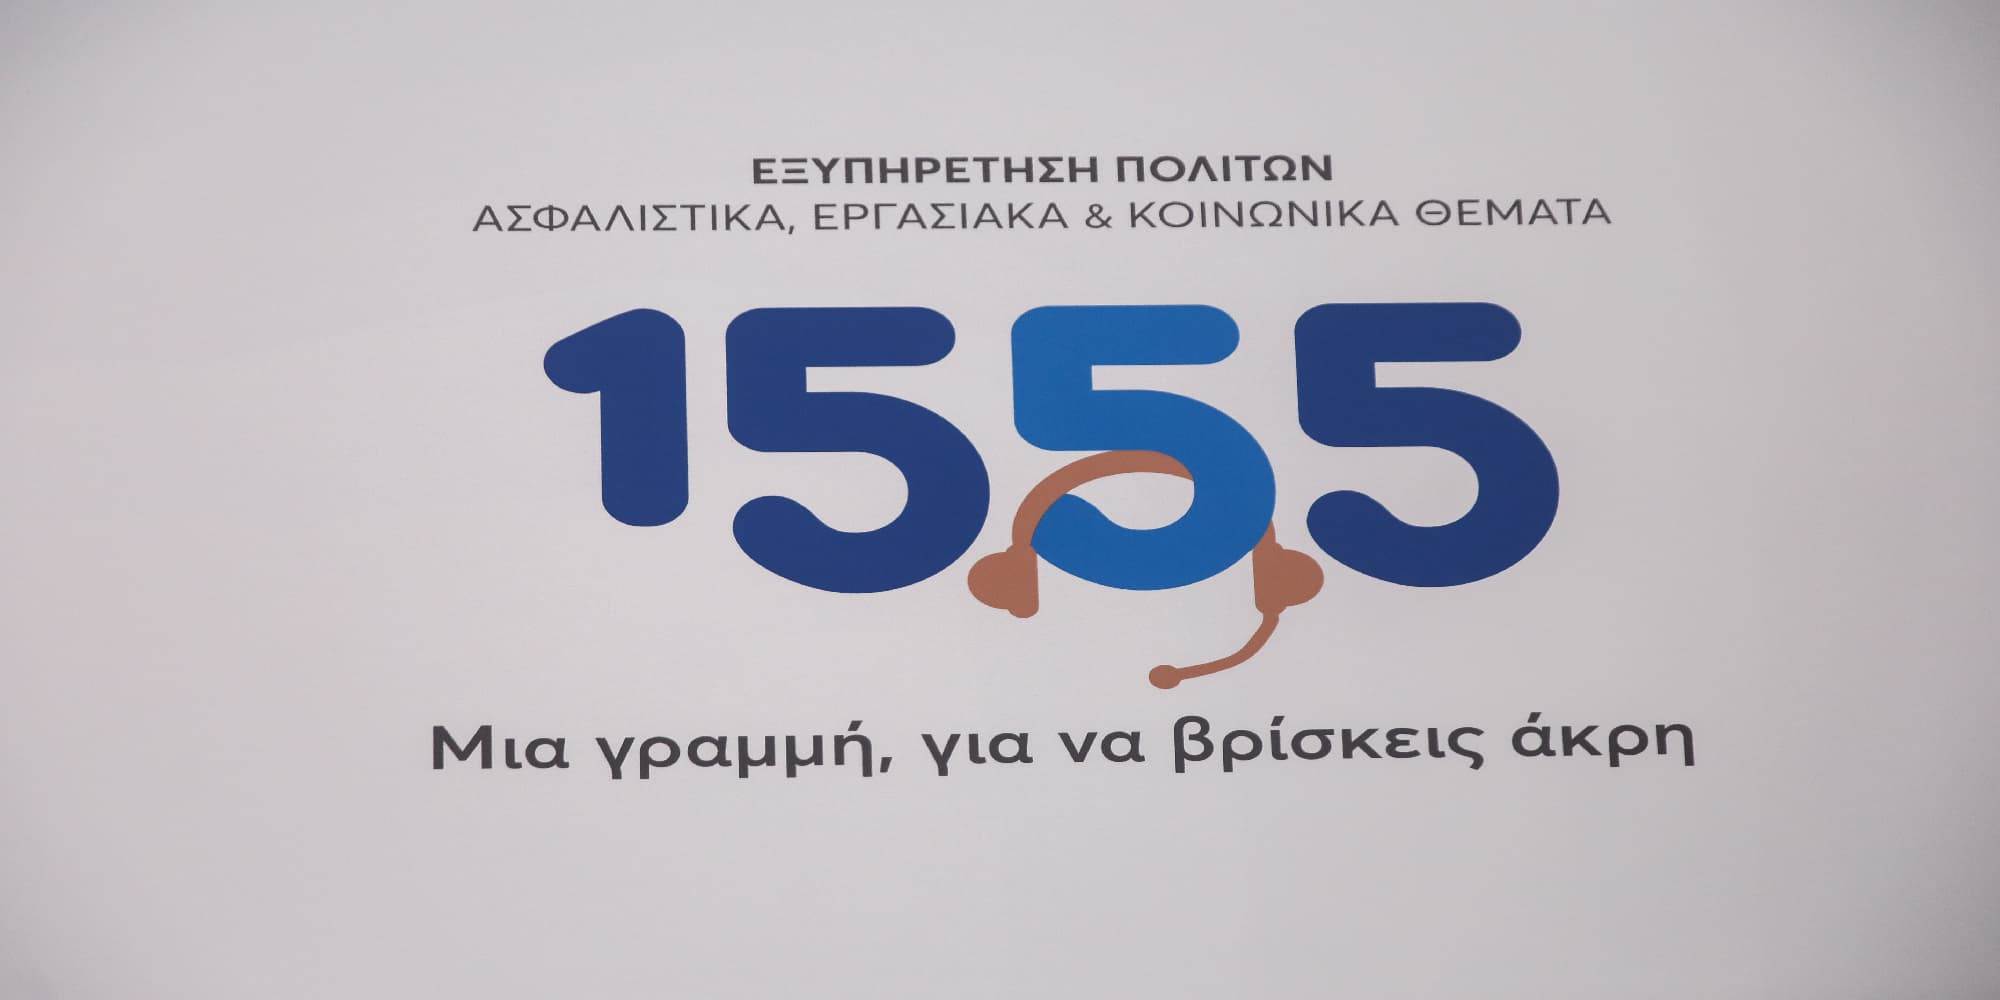 O τετραψήφιος αριθμός του υπουργείου Εργασίας 1555